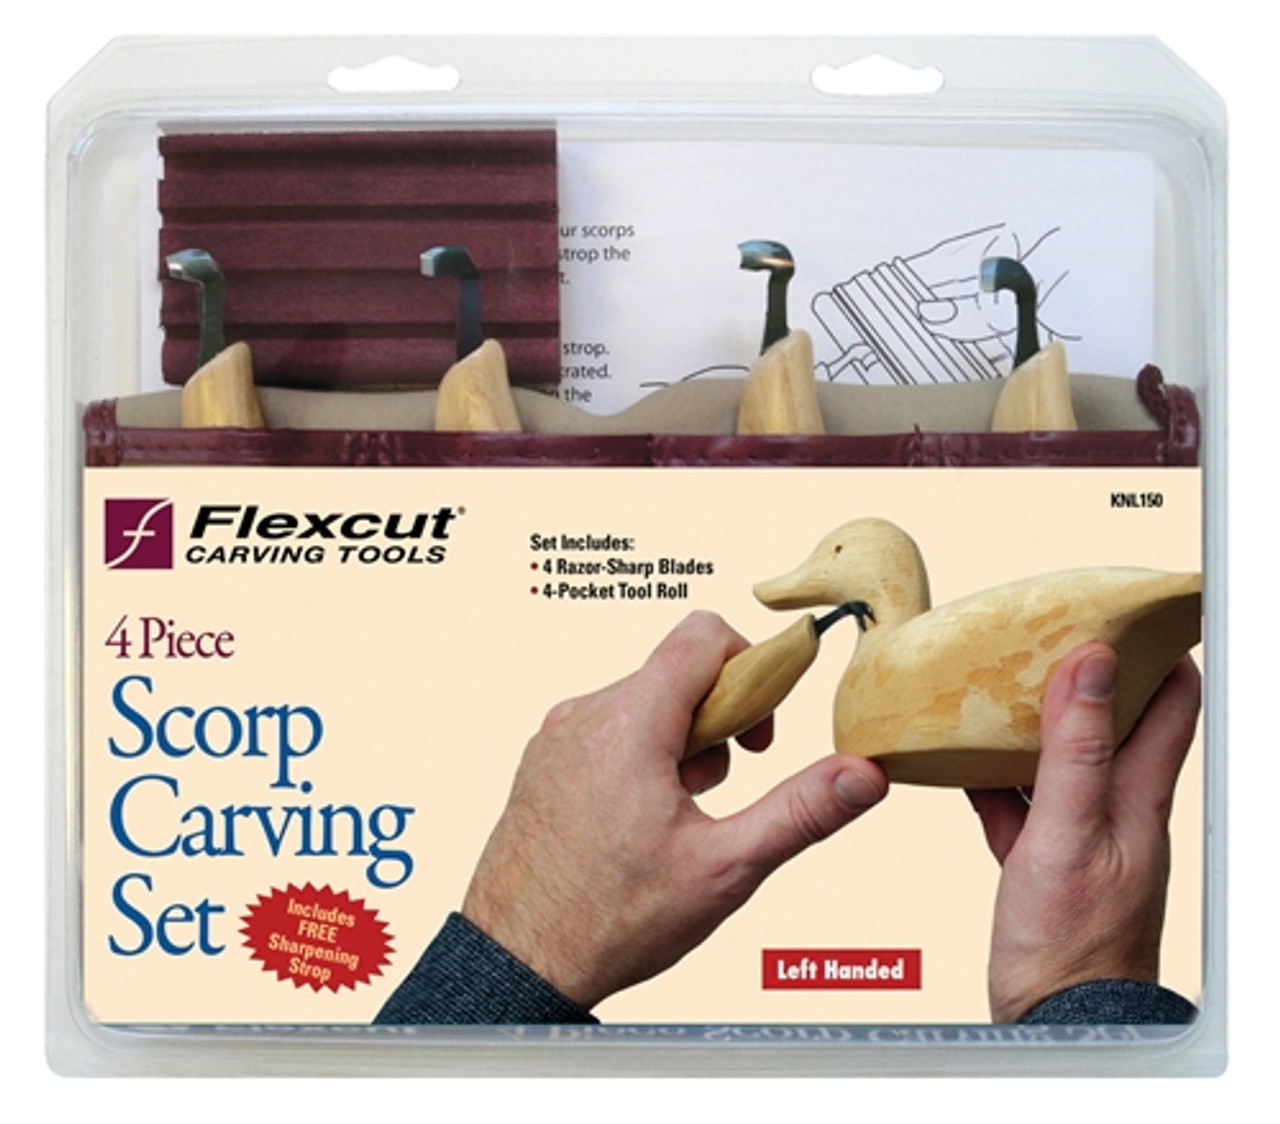 Flexcut Left-Handed Scorp Set shown in it's original package.